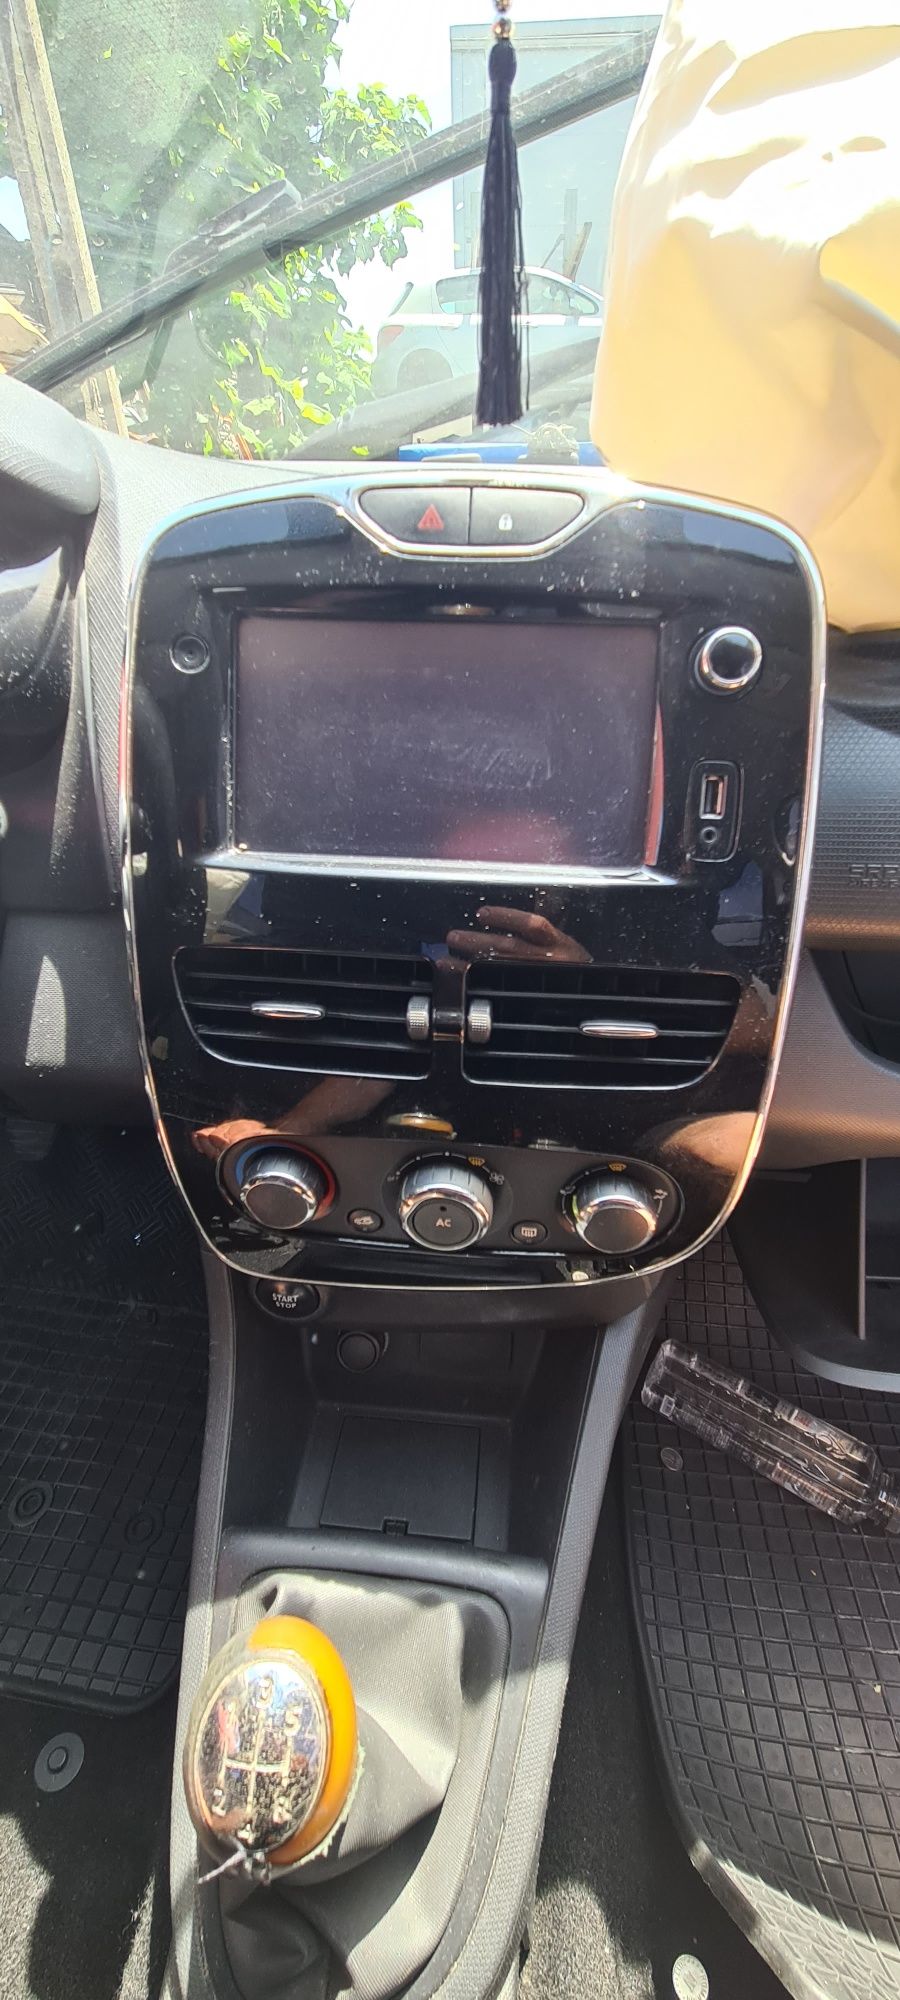 Navigatie originala Renault Clio 4, Touchscreen + rama completa